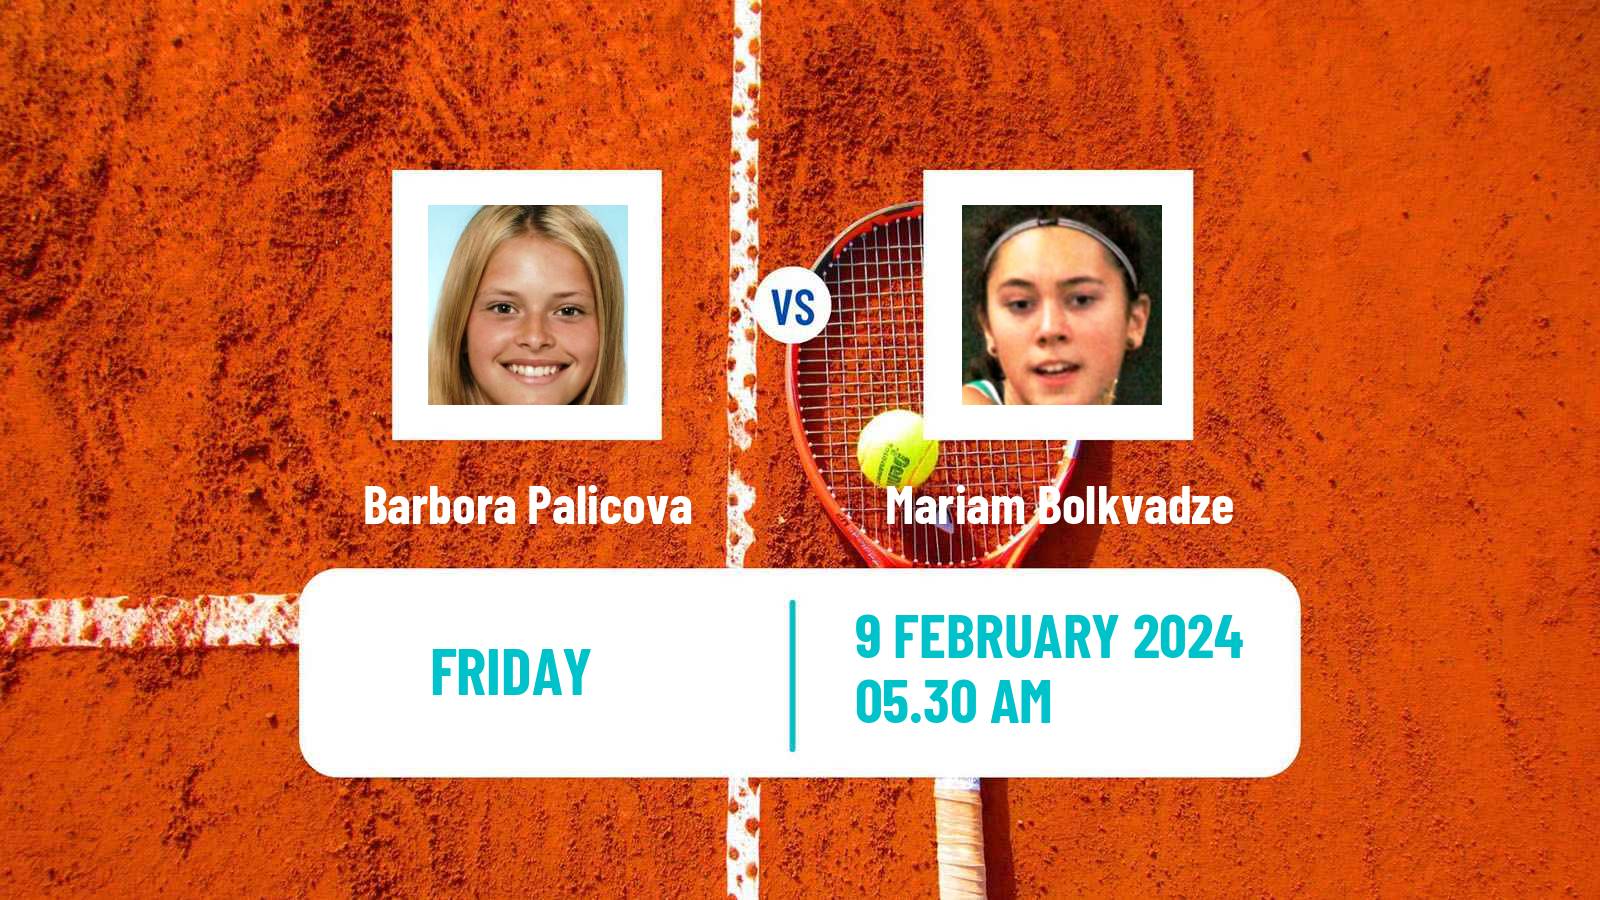 Tennis ITF W50 Edgbaston Women Barbora Palicova - Mariam Bolkvadze